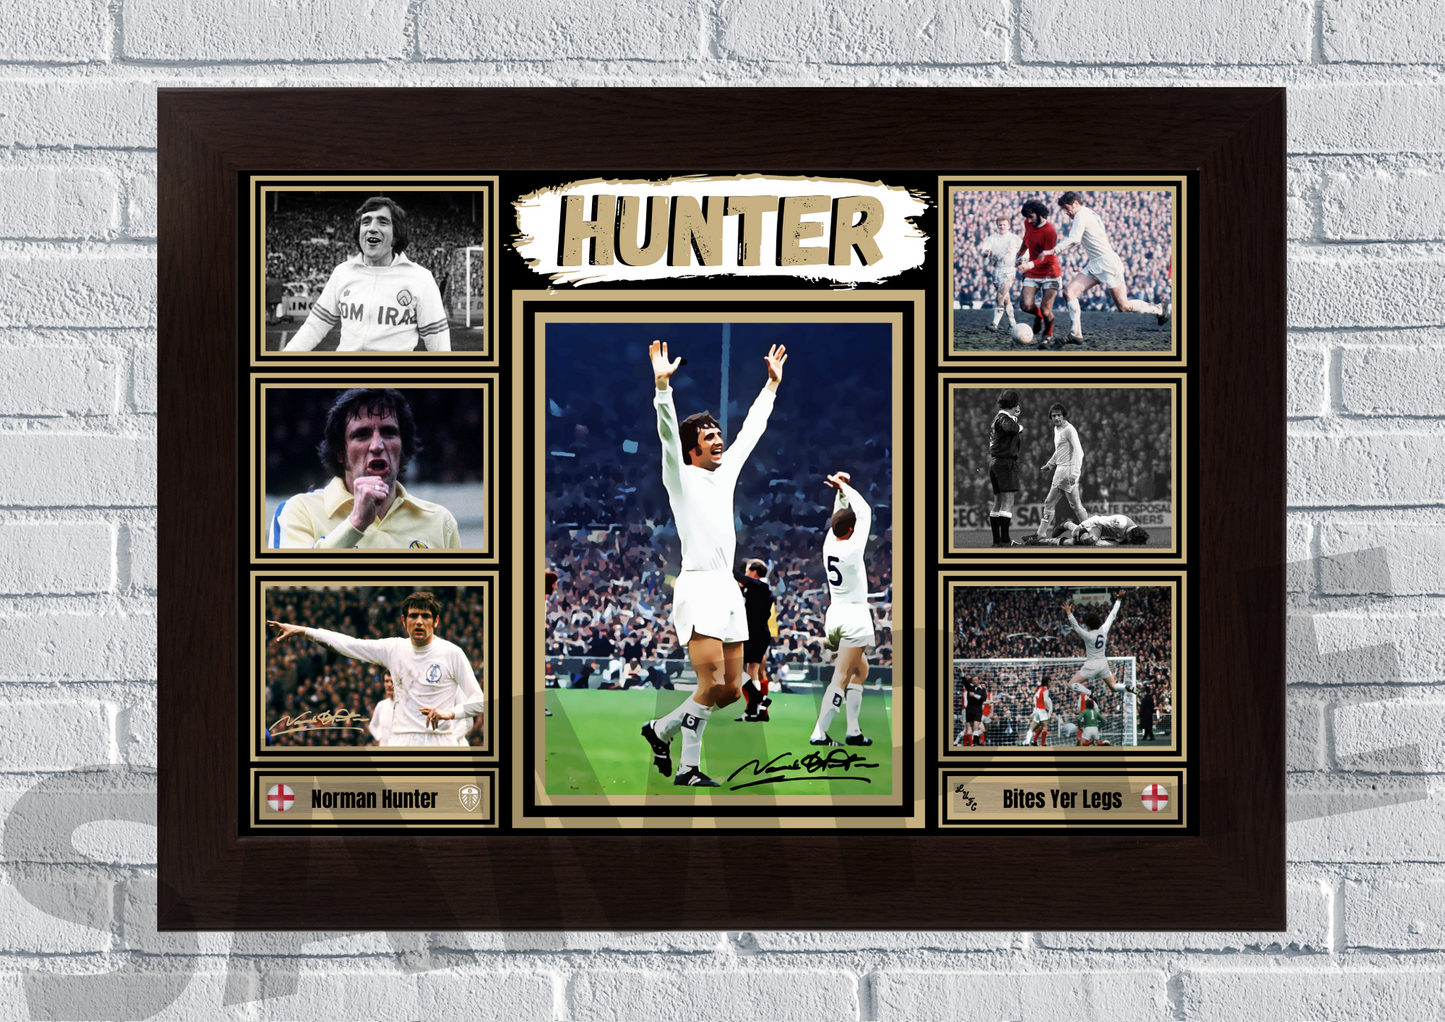 Norman Hunter - Leeds United legend Football Memorabilia/Collectible/Signed print #99